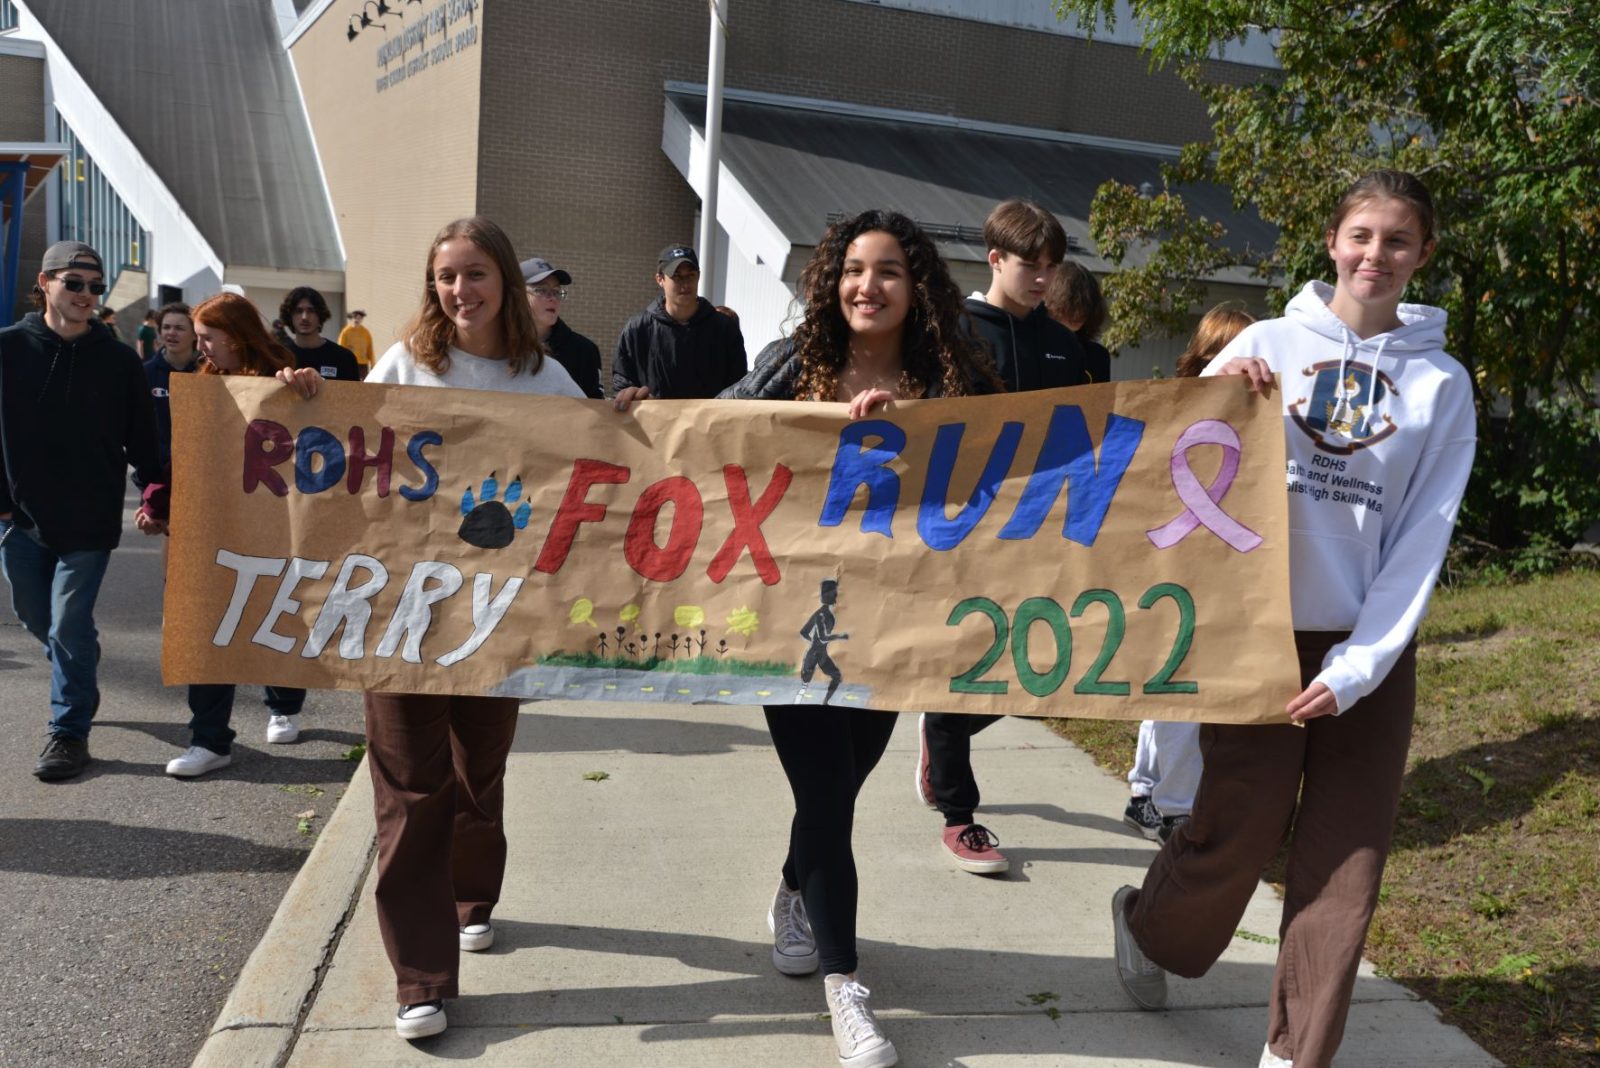 Schools raise thousands for Terry Fox Run Day